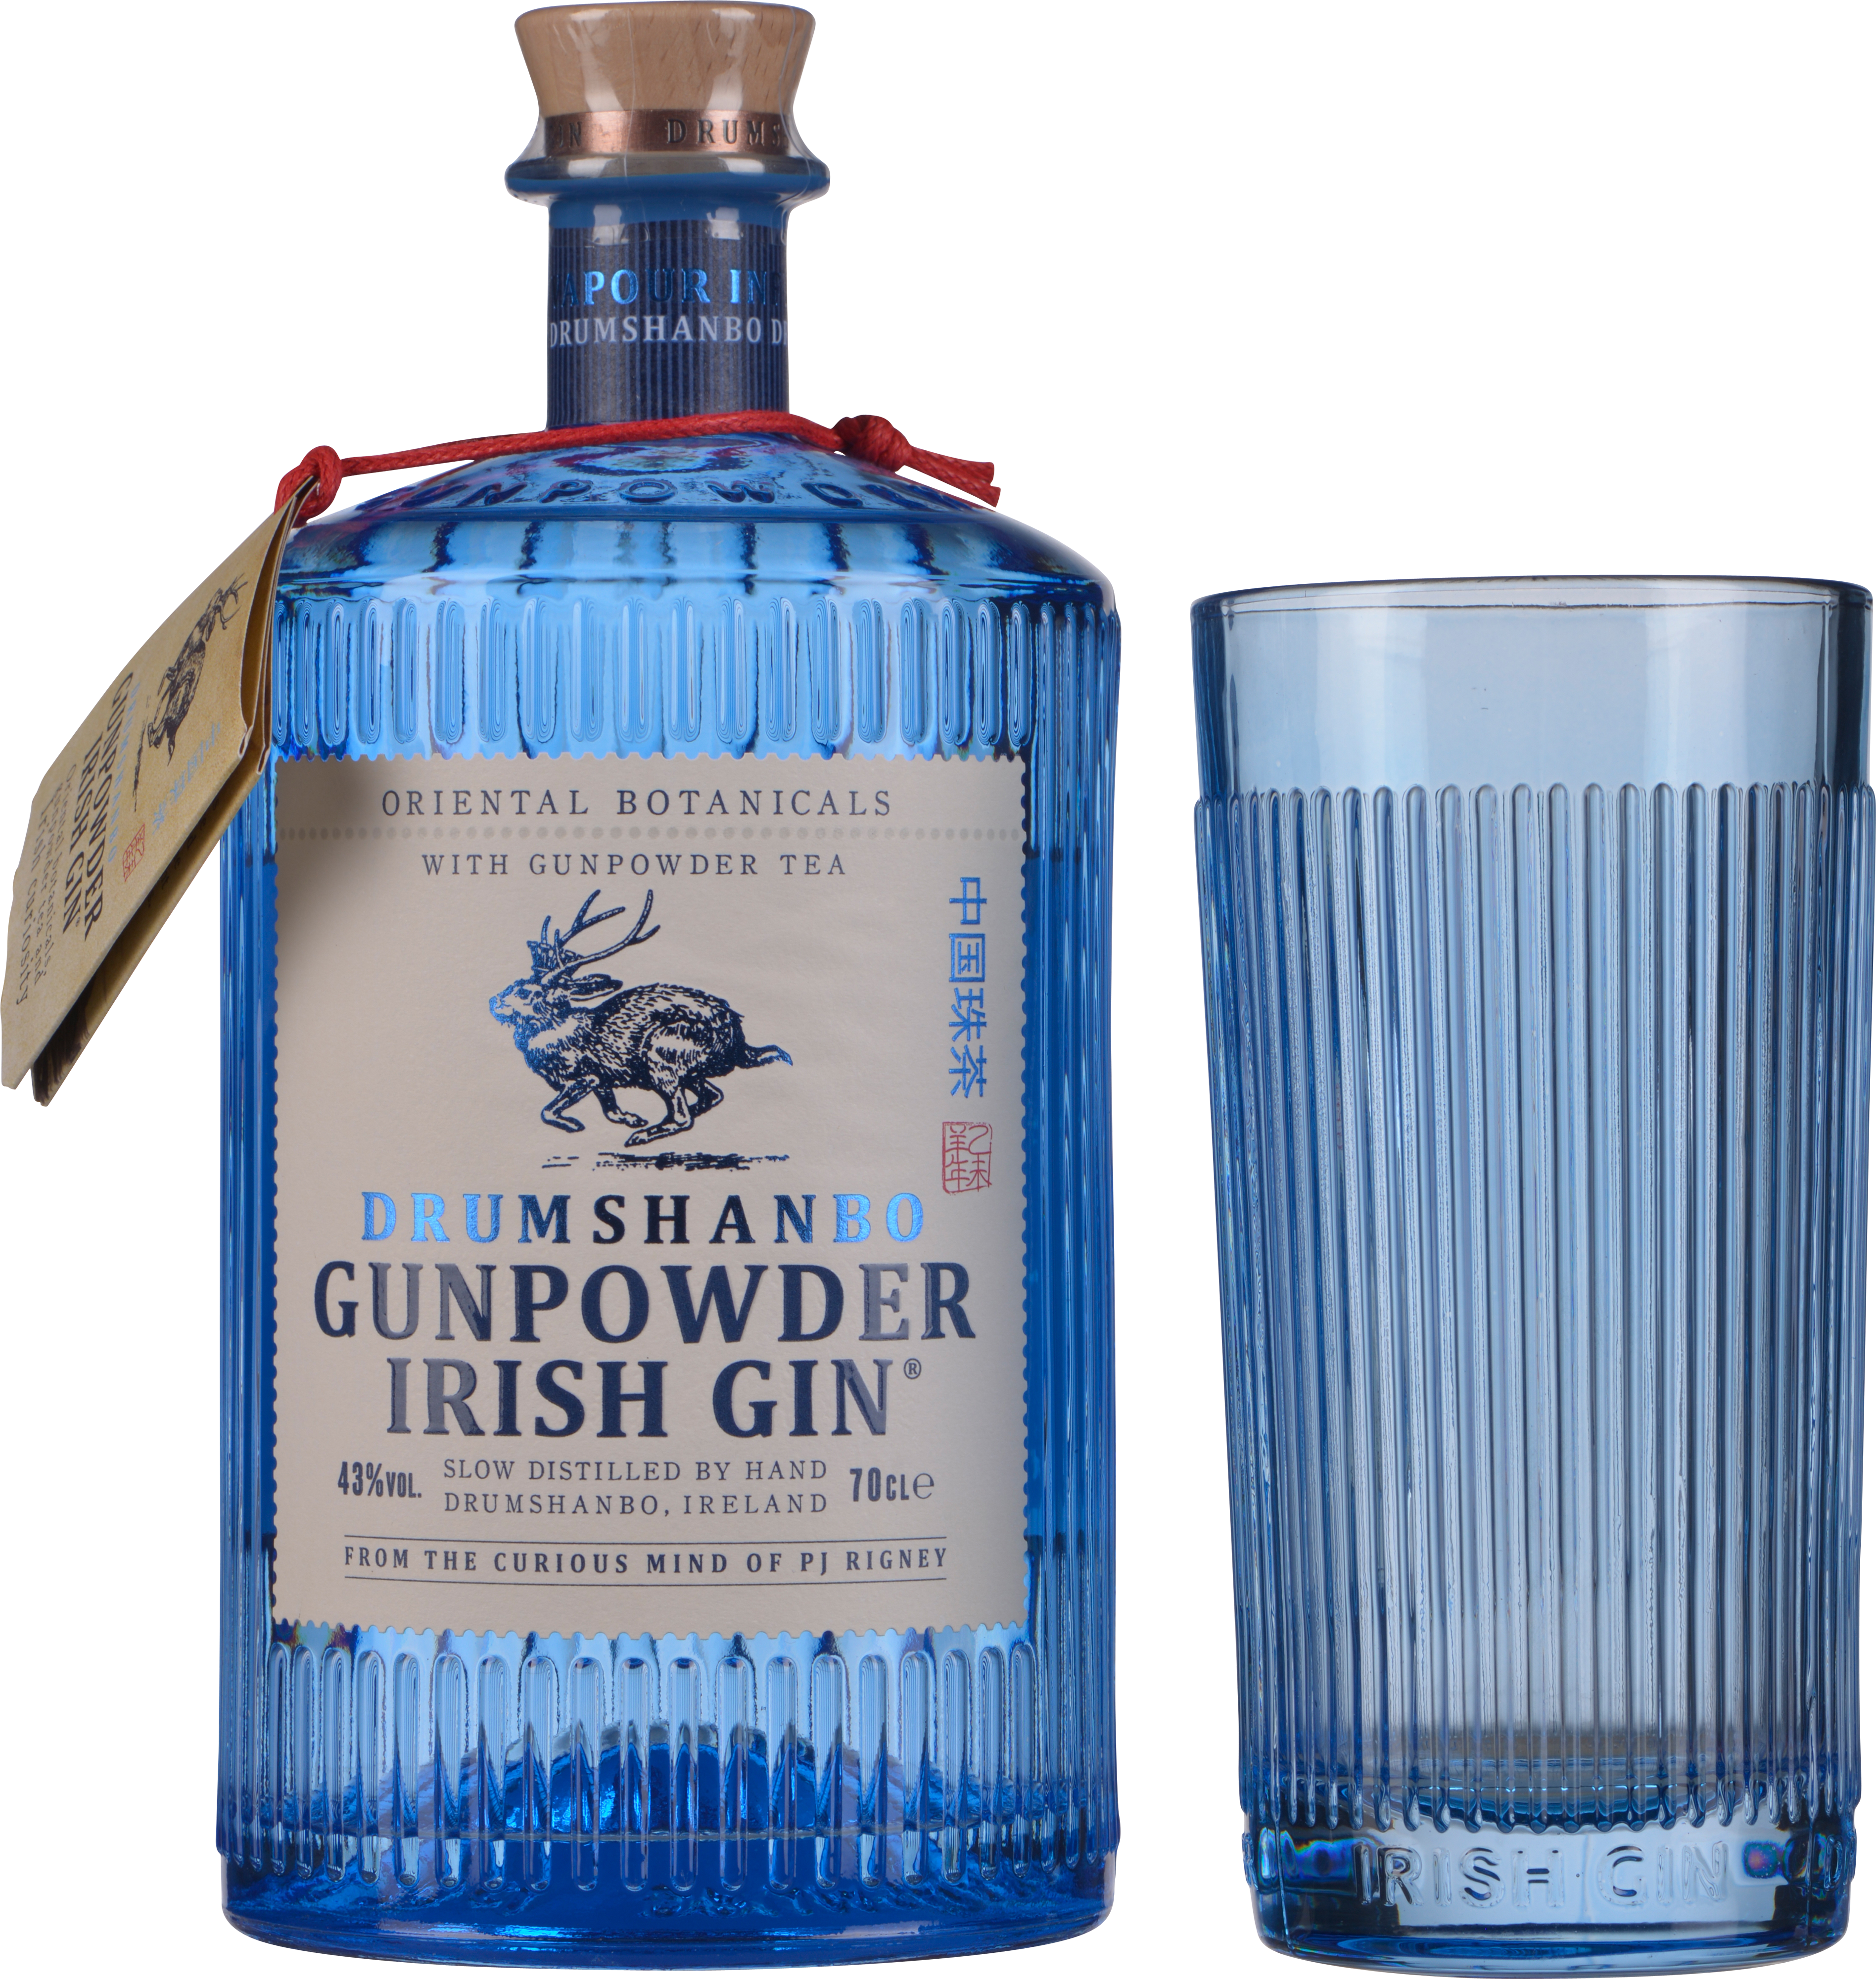 Irish gin. Драмшанбо Ганпаудер Айриш Джин. Drumshanbo Gunpowder Irish Gin. Ирландский Джин Drumshanbo Gunpowder. Джин Gunpowder Irish Gin.